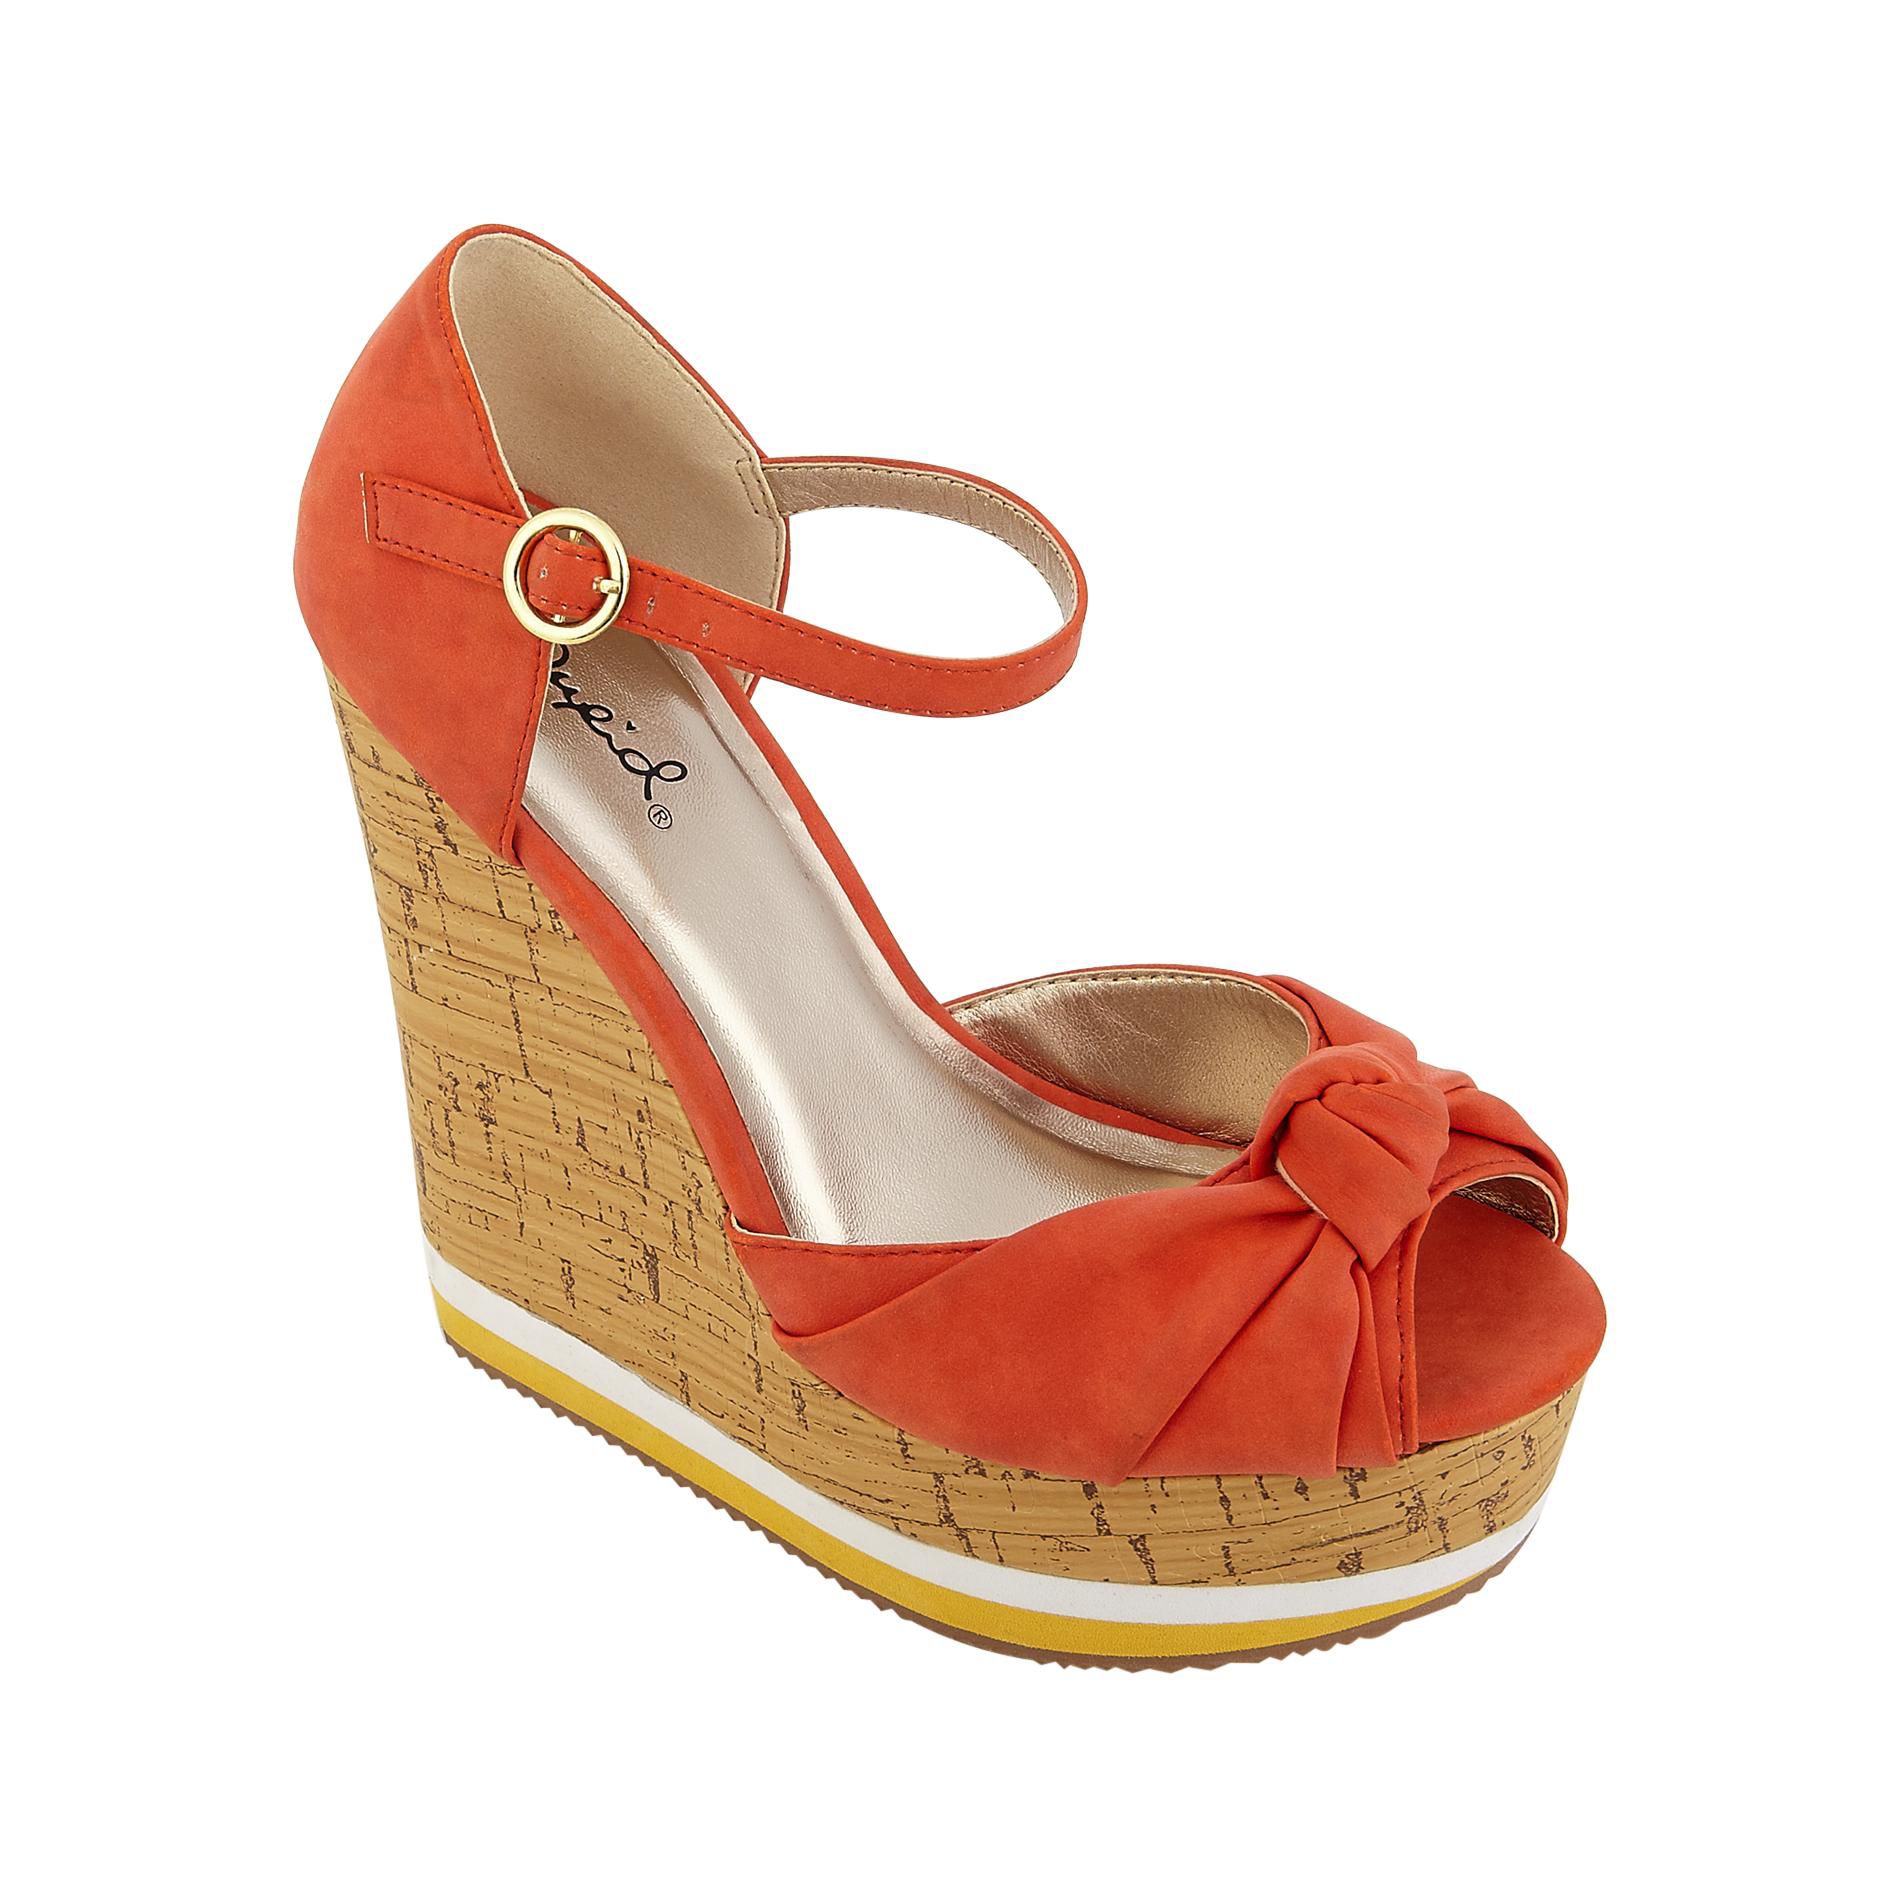 Qupid Women's Boteco-02 Colorblock Wedge Sandal - Orange